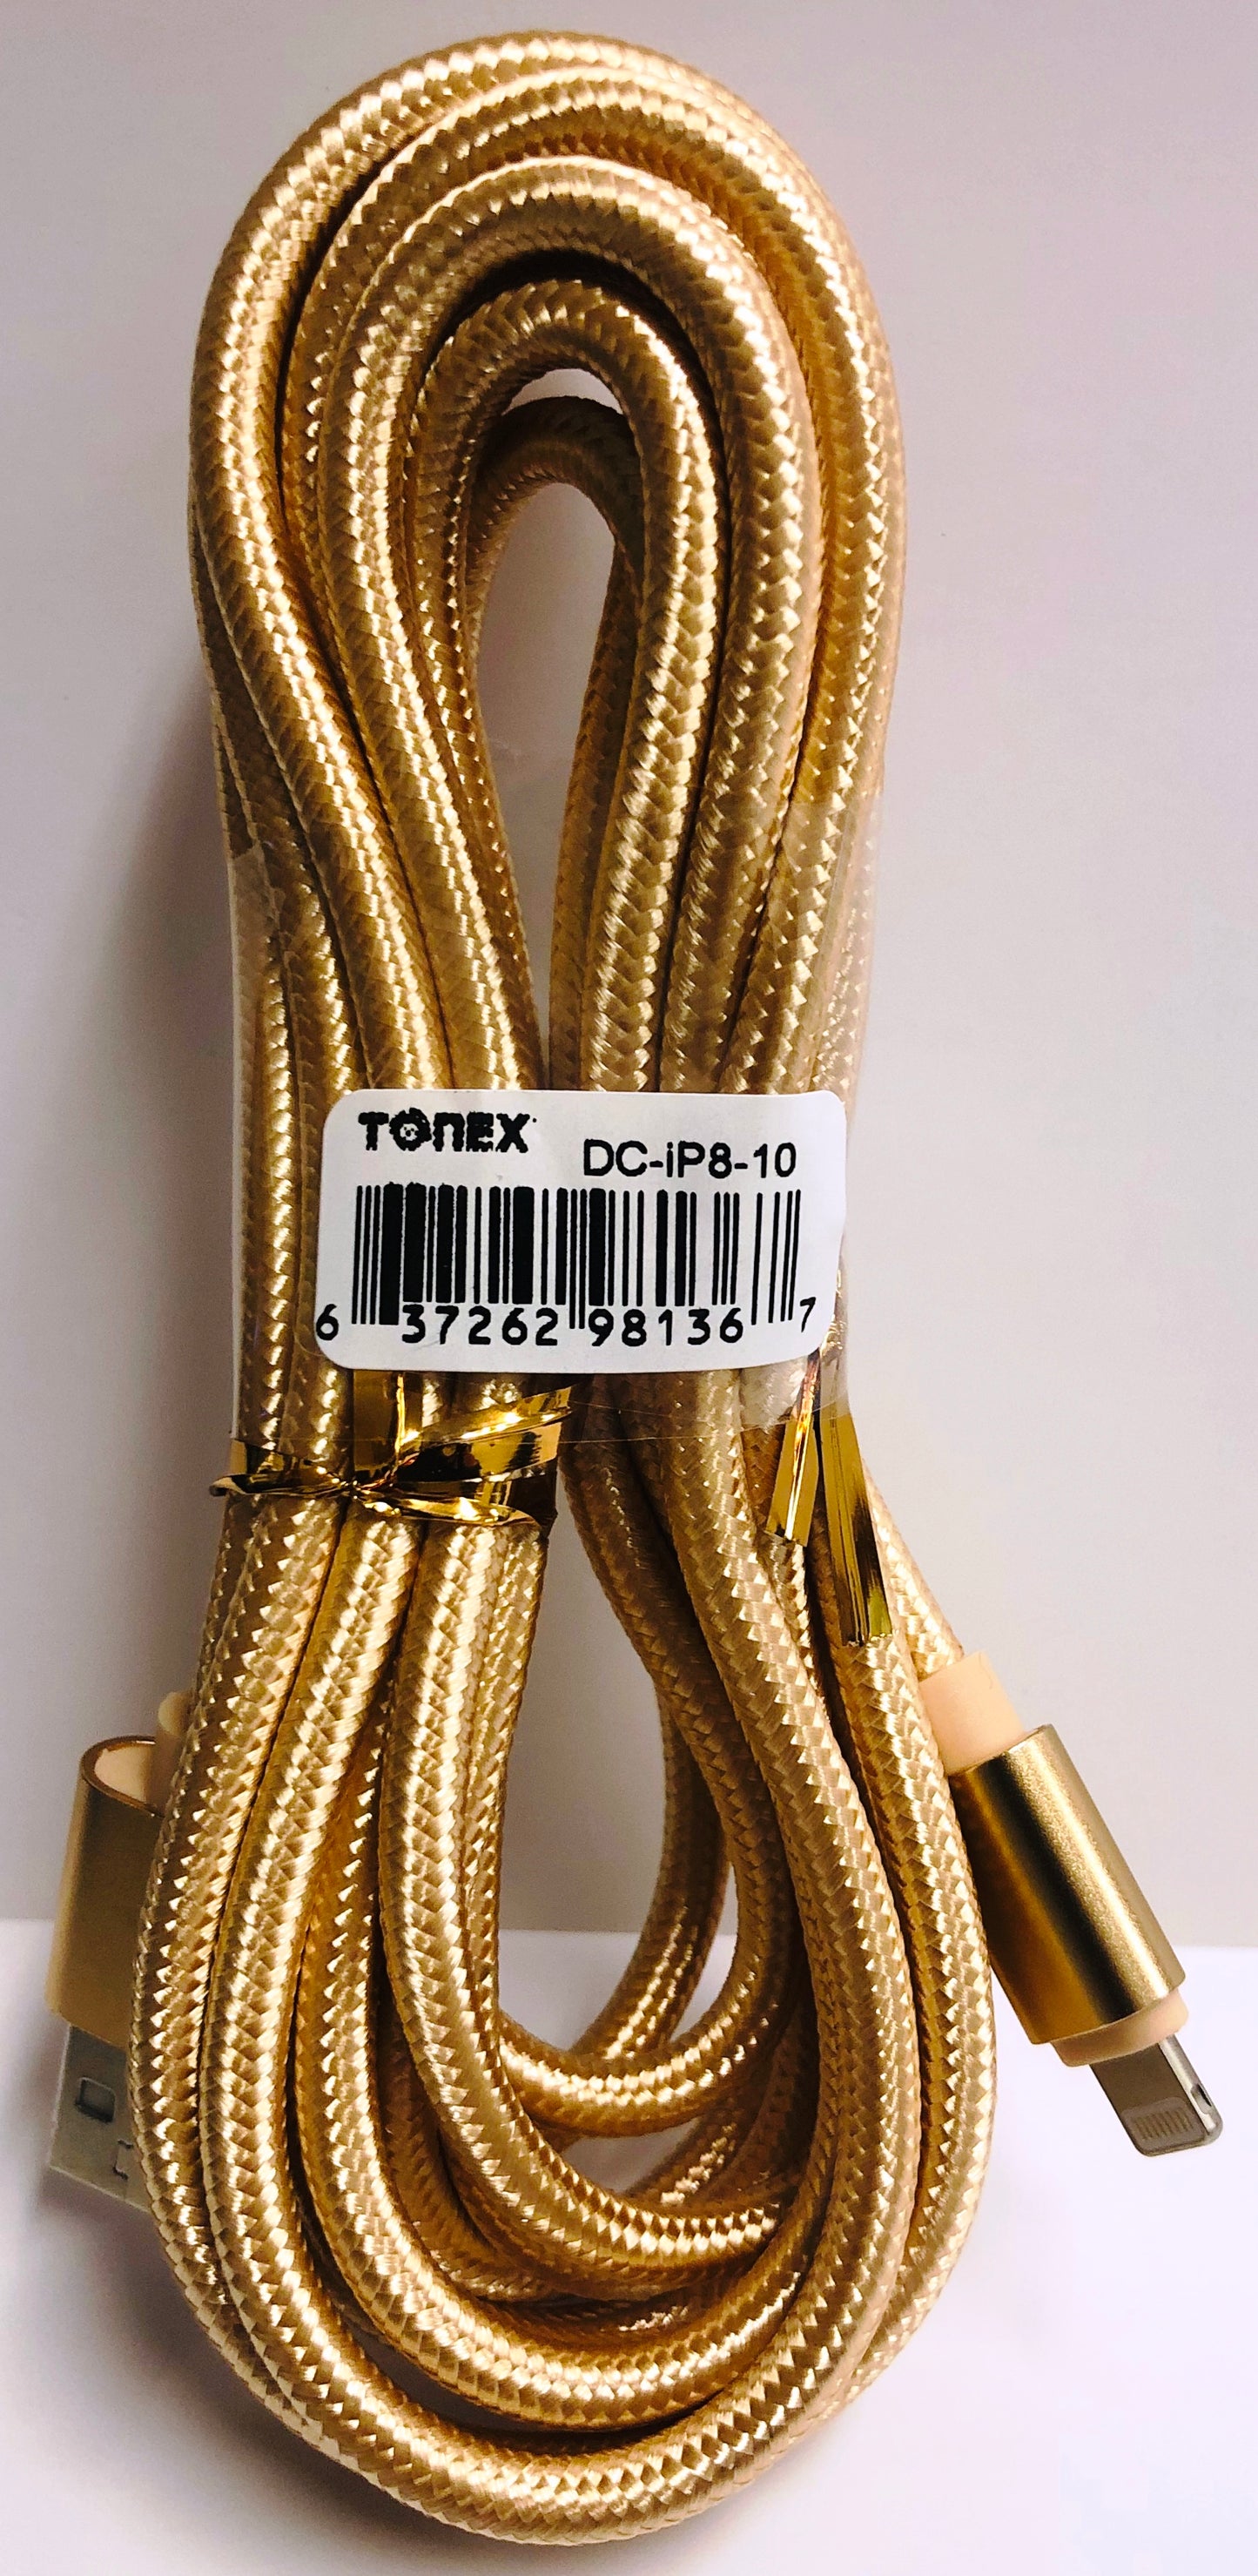 "Tonex" 10" Apple 8 Pin Lightning USB Braided Cable, Gold